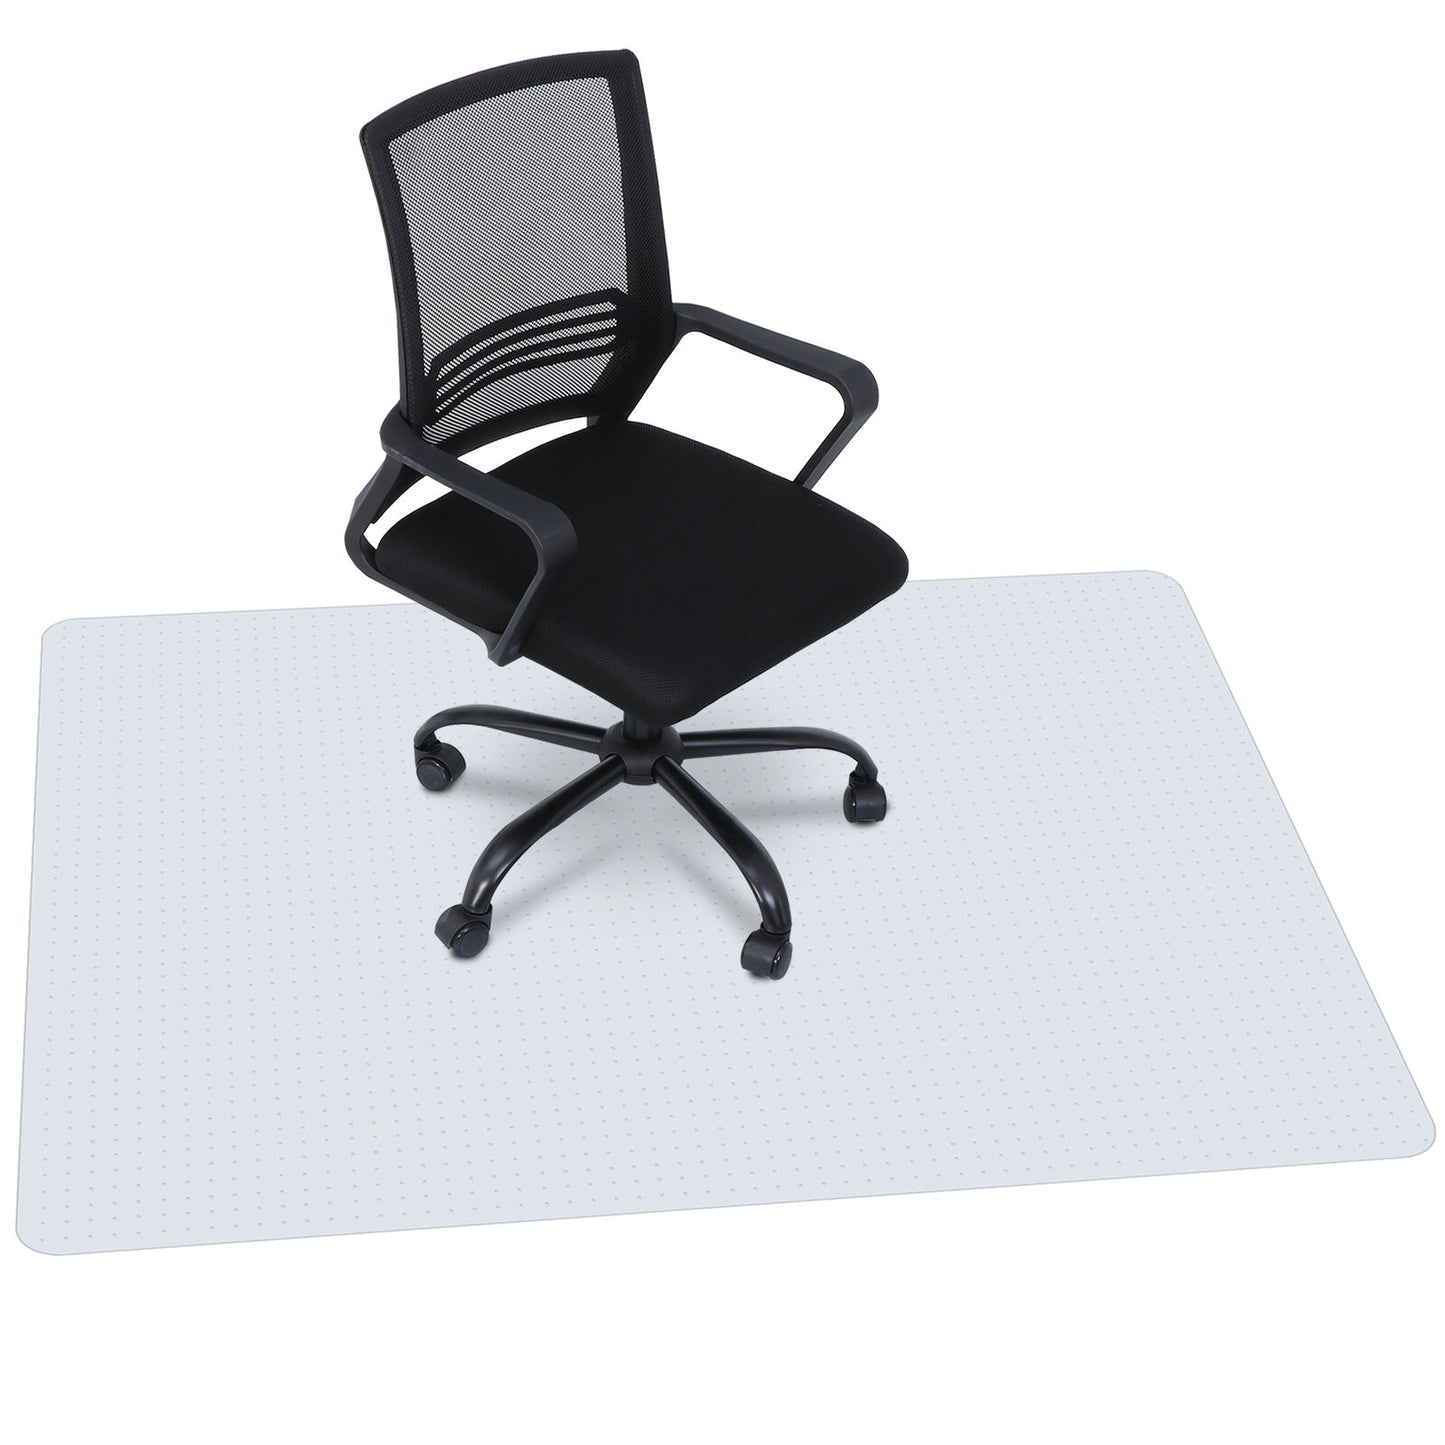 60.2"X46.4" Home Office Chair Mat PVC Floor Studded Back For Pile Carpet